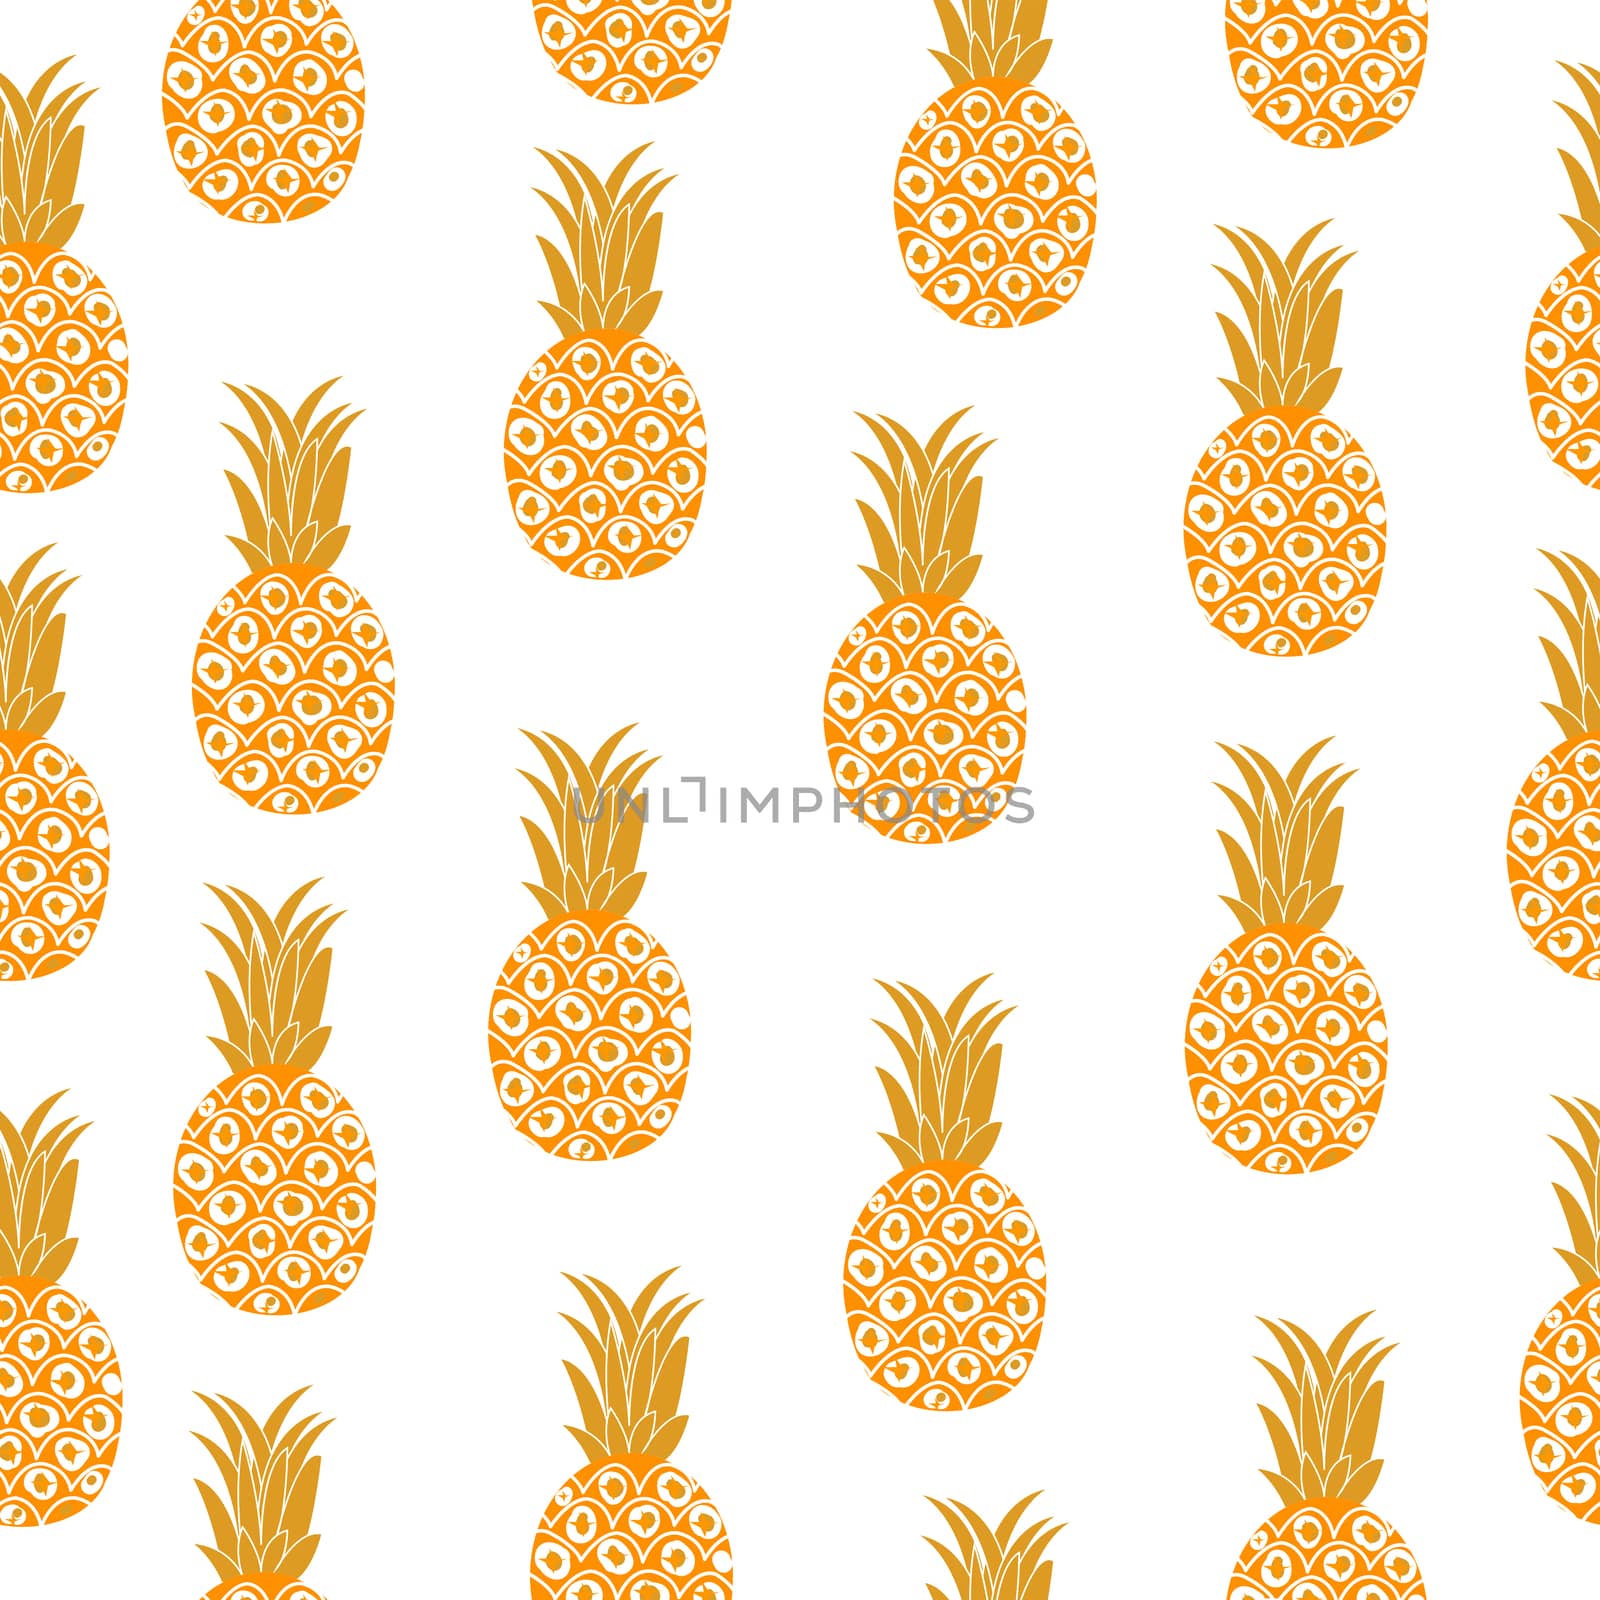 Pineapple seamless texture. Pineapple background, wallpaper, fabric illustration